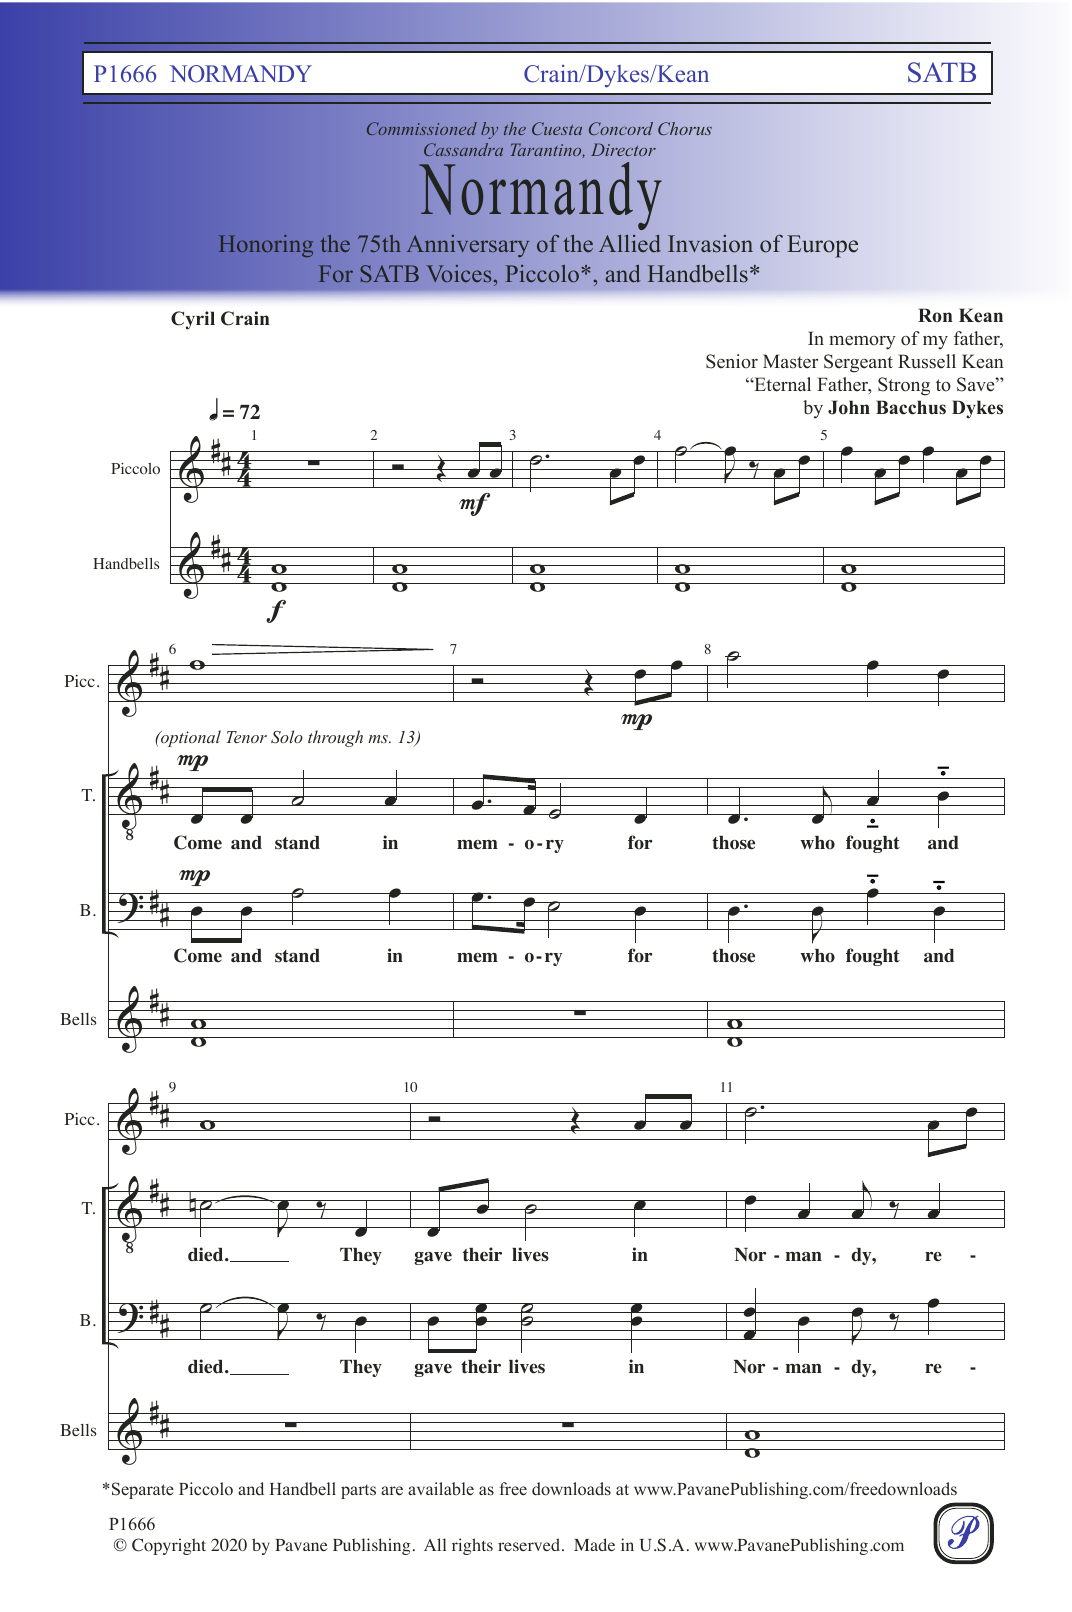 Ron Kean Normandy Sheet Music Notes & Chords for SATB Choir - Download or Print PDF